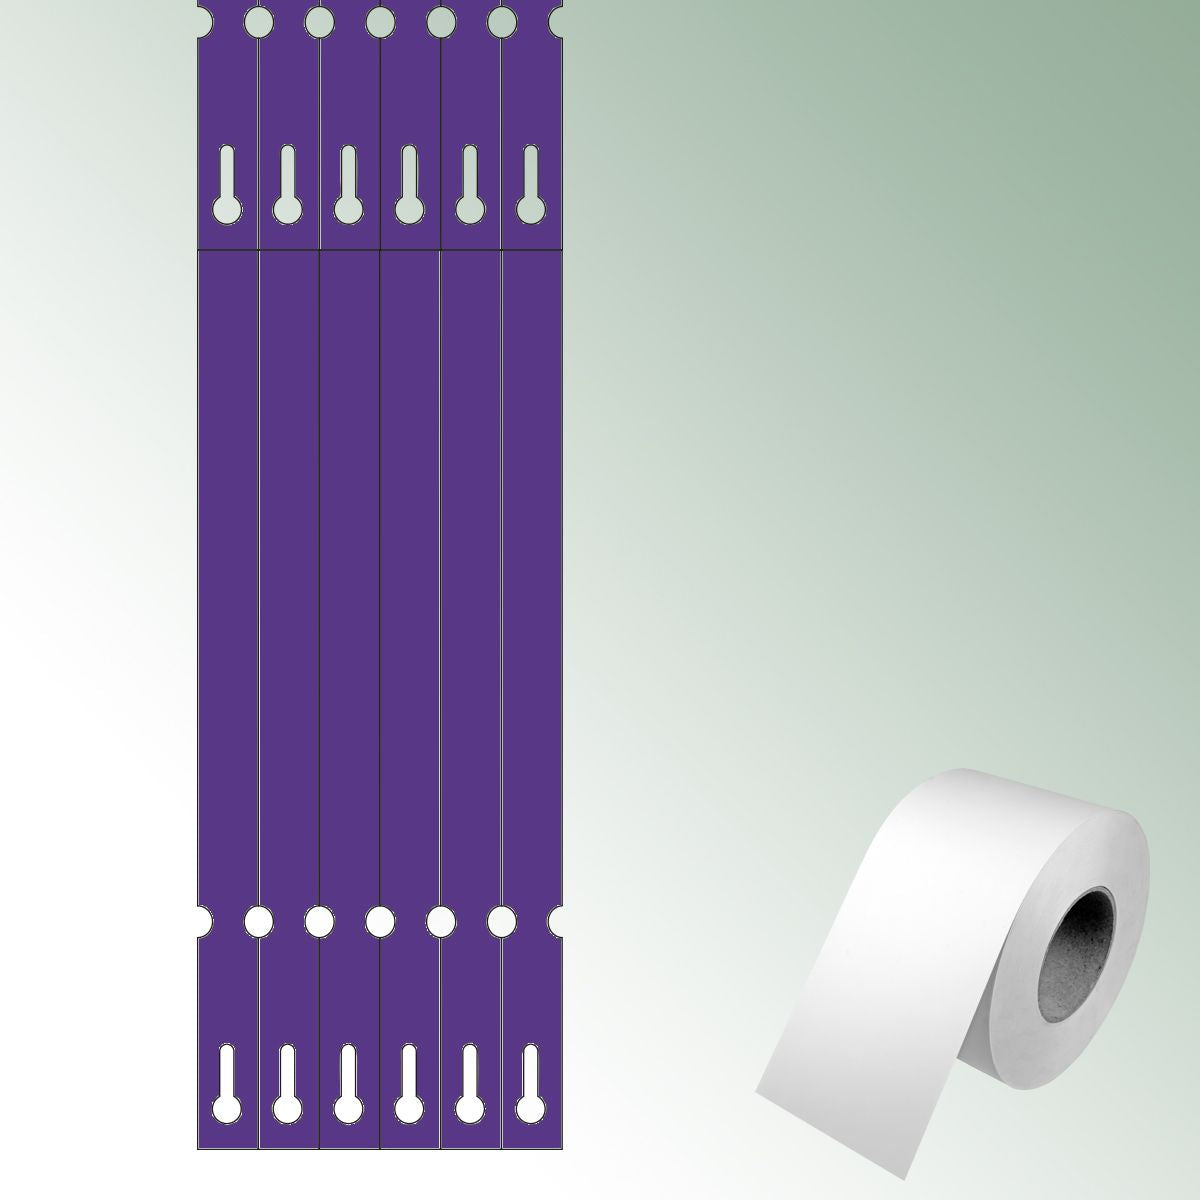 Opti-loops 250x17 violet, unprinted No./roll = 2000 pieces